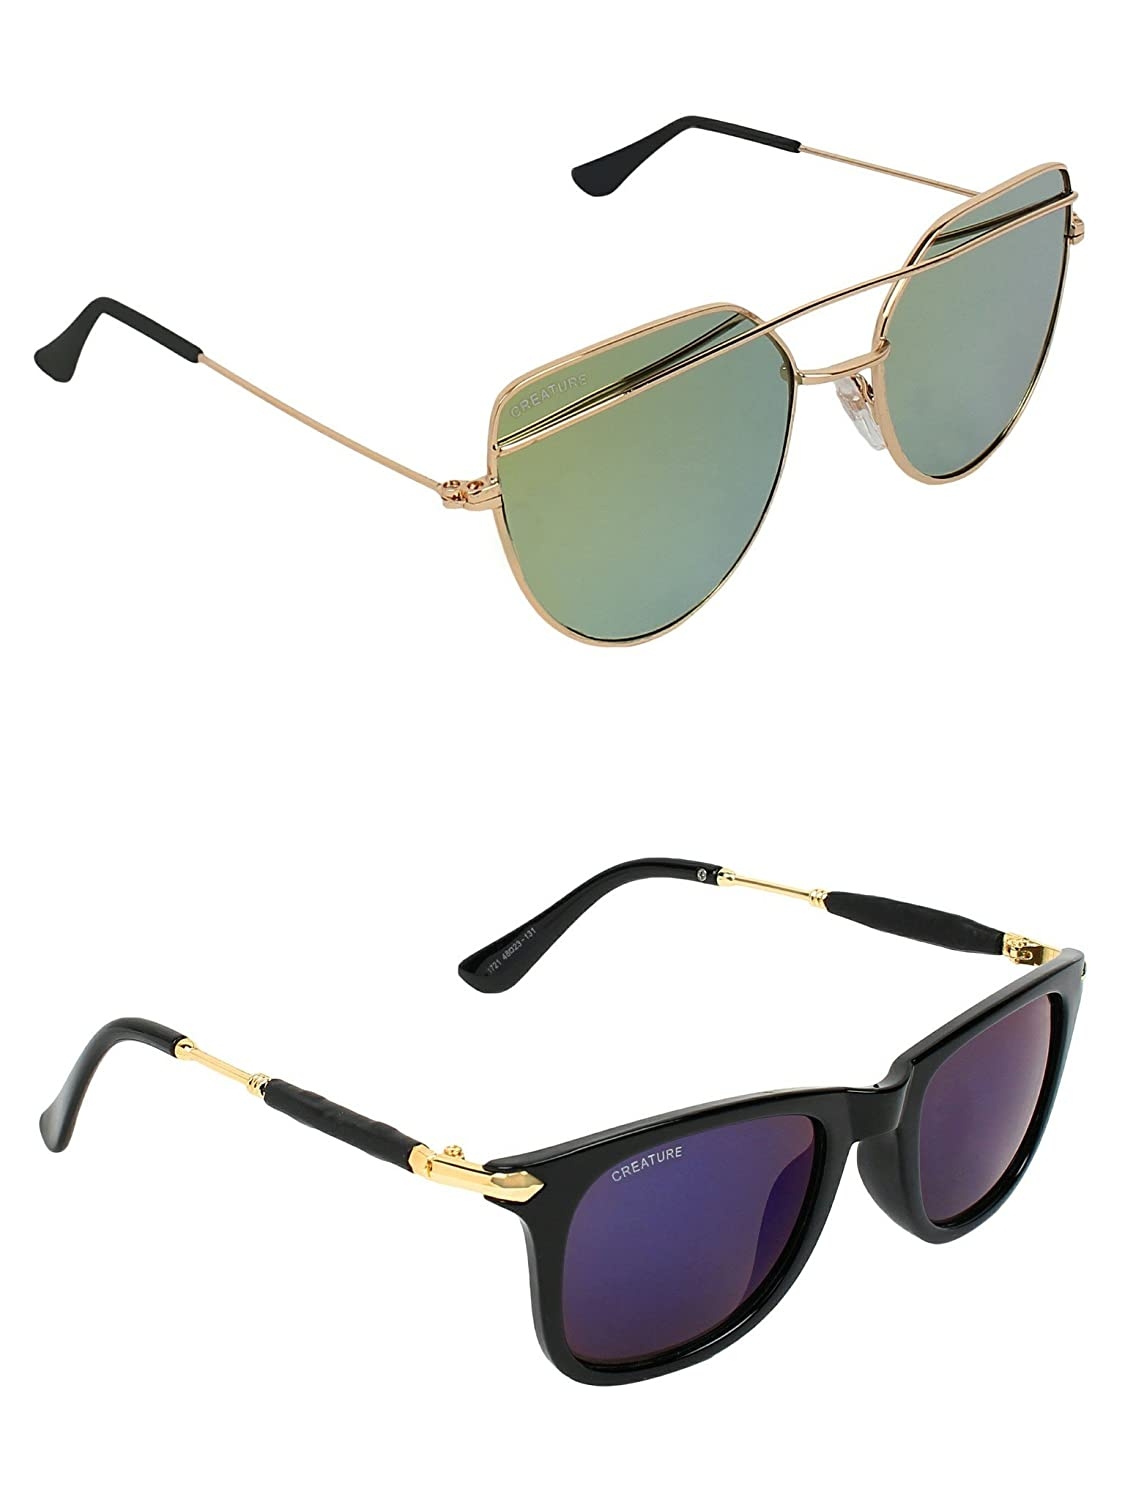 CREATURE | CREATURE Golden Aviator And Blue Wayfarer Sunglasses Combo with UV Protection (Lens-Black/Blue|Frame-Gold/Black)